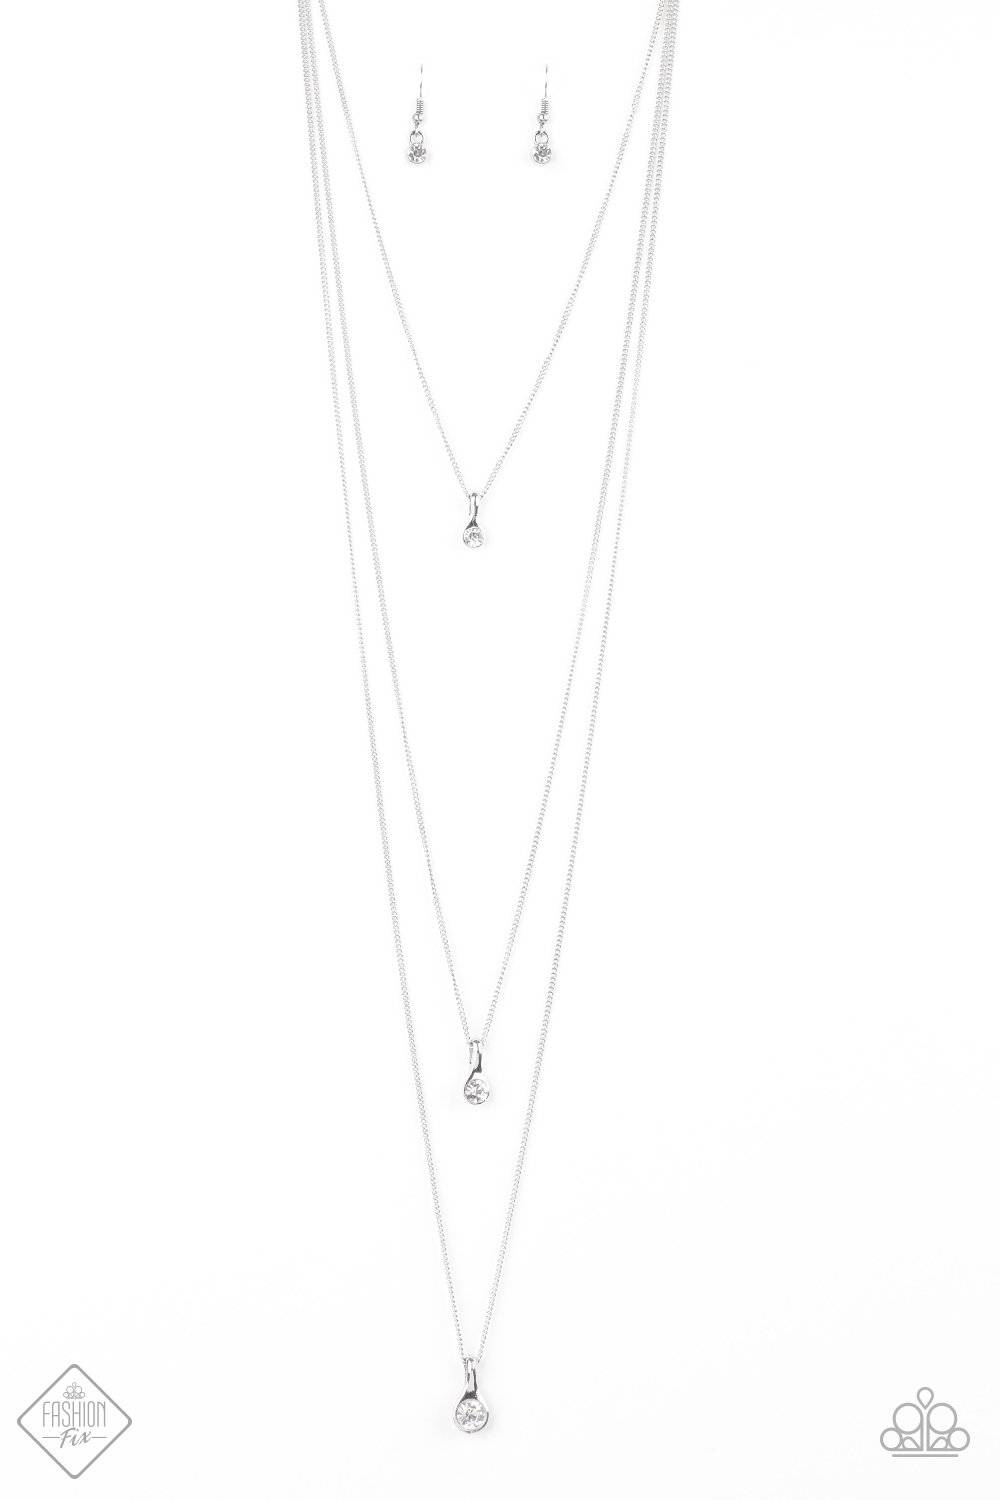 Crystal Chic - White Rhinestone Layered Necklace - Paparazzi Accessories - GlaMarous Titi Jewels